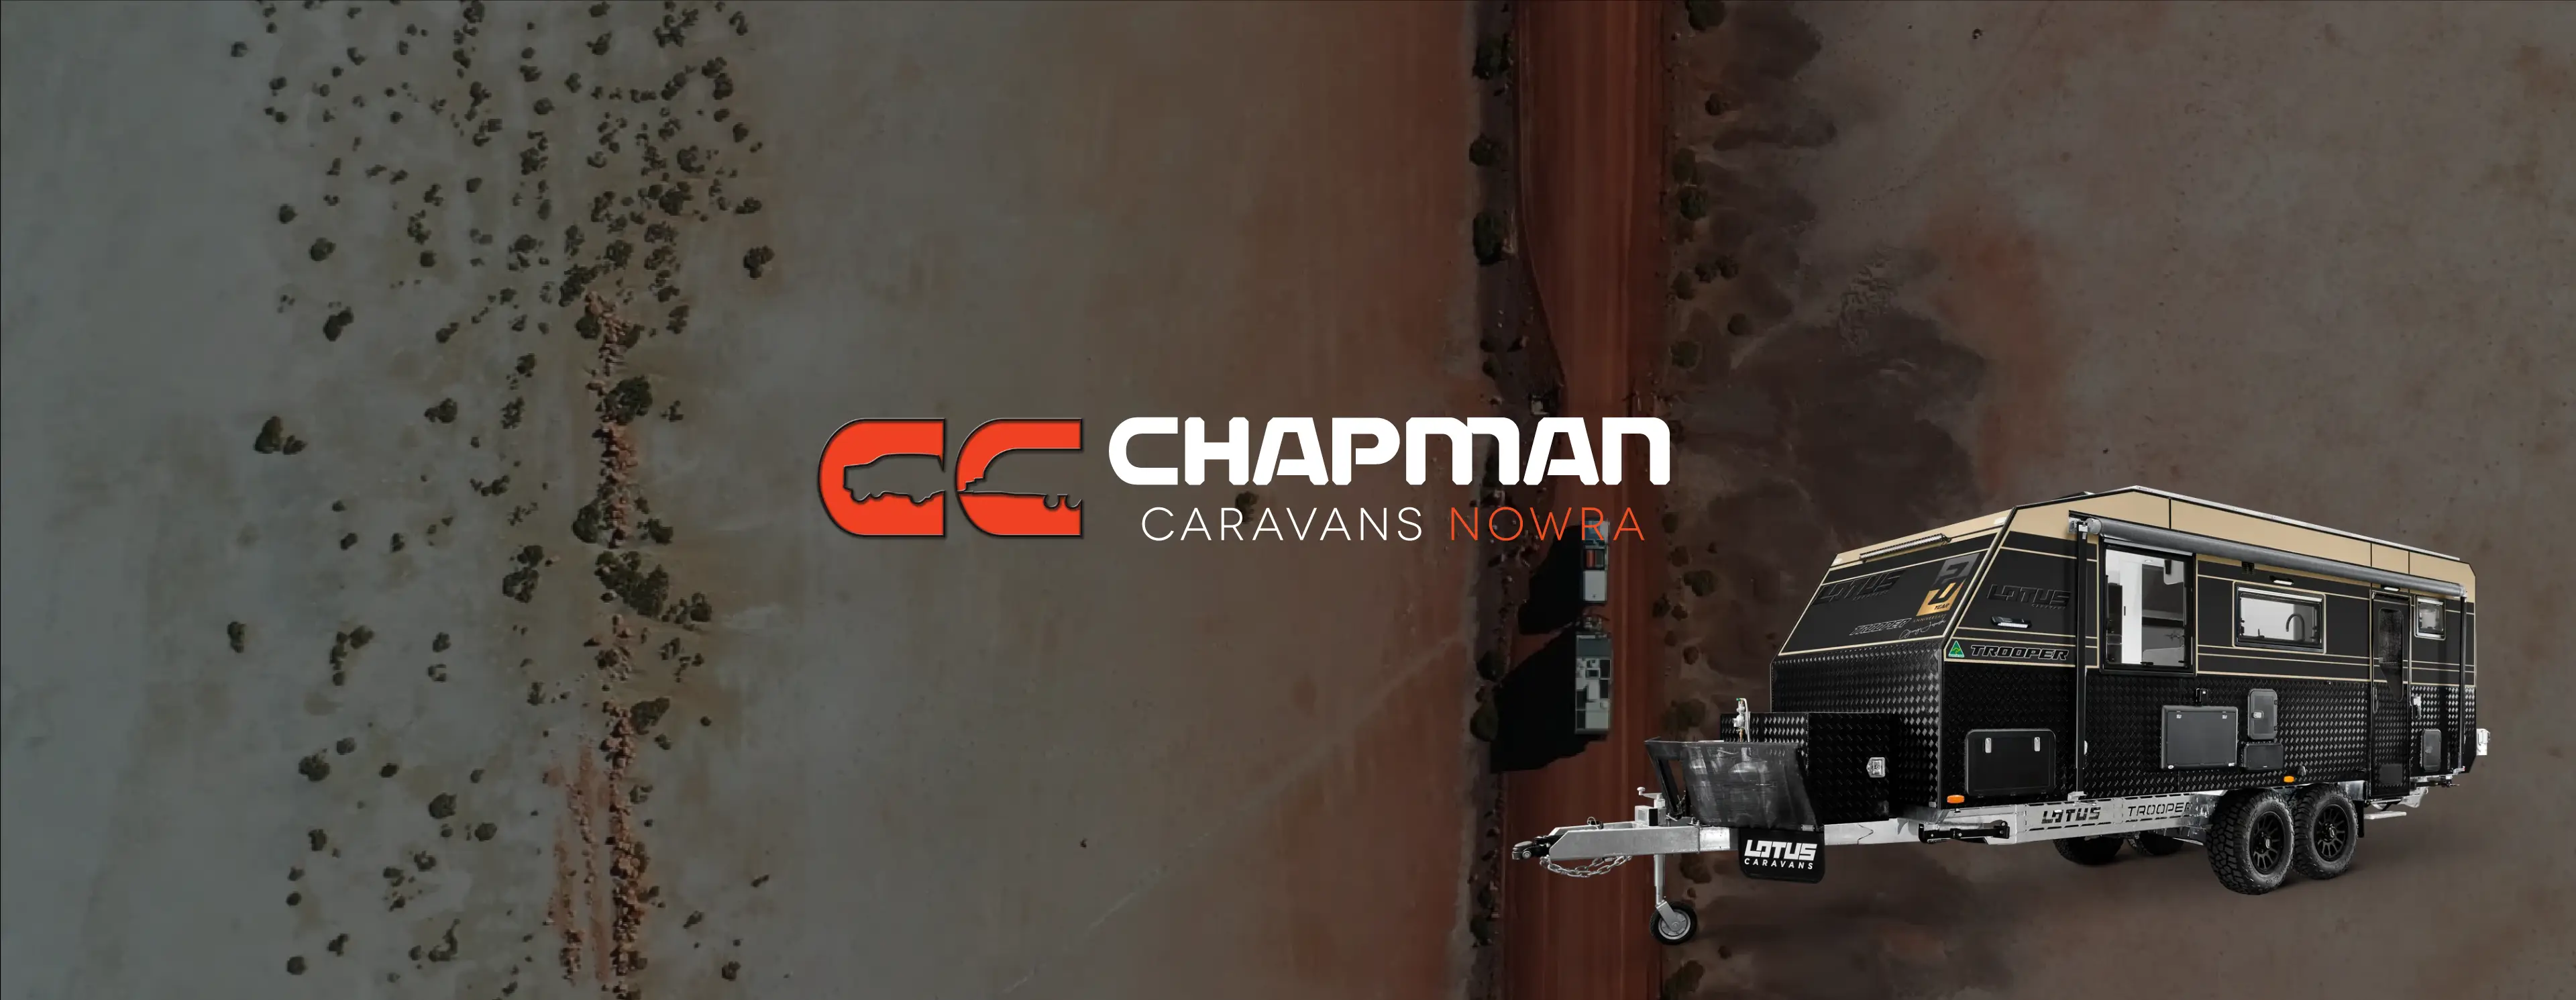 Thumbnail for Chapman Caravans